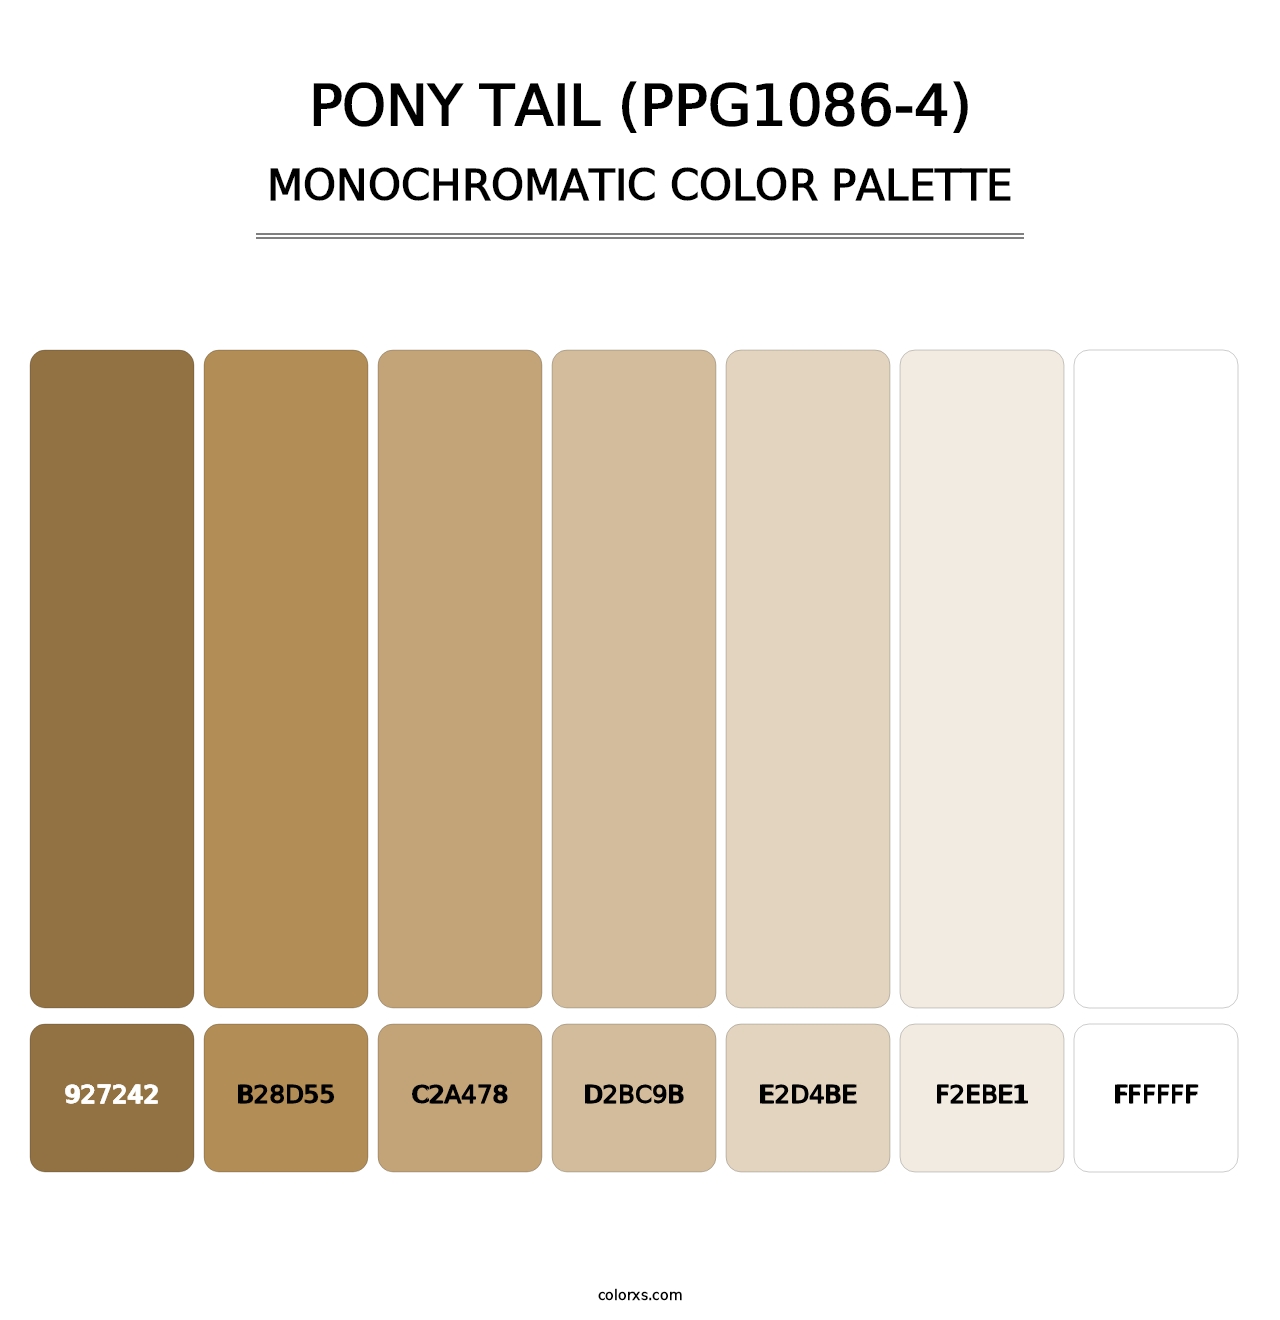 Pony Tail (PPG1086-4) - Monochromatic Color Palette